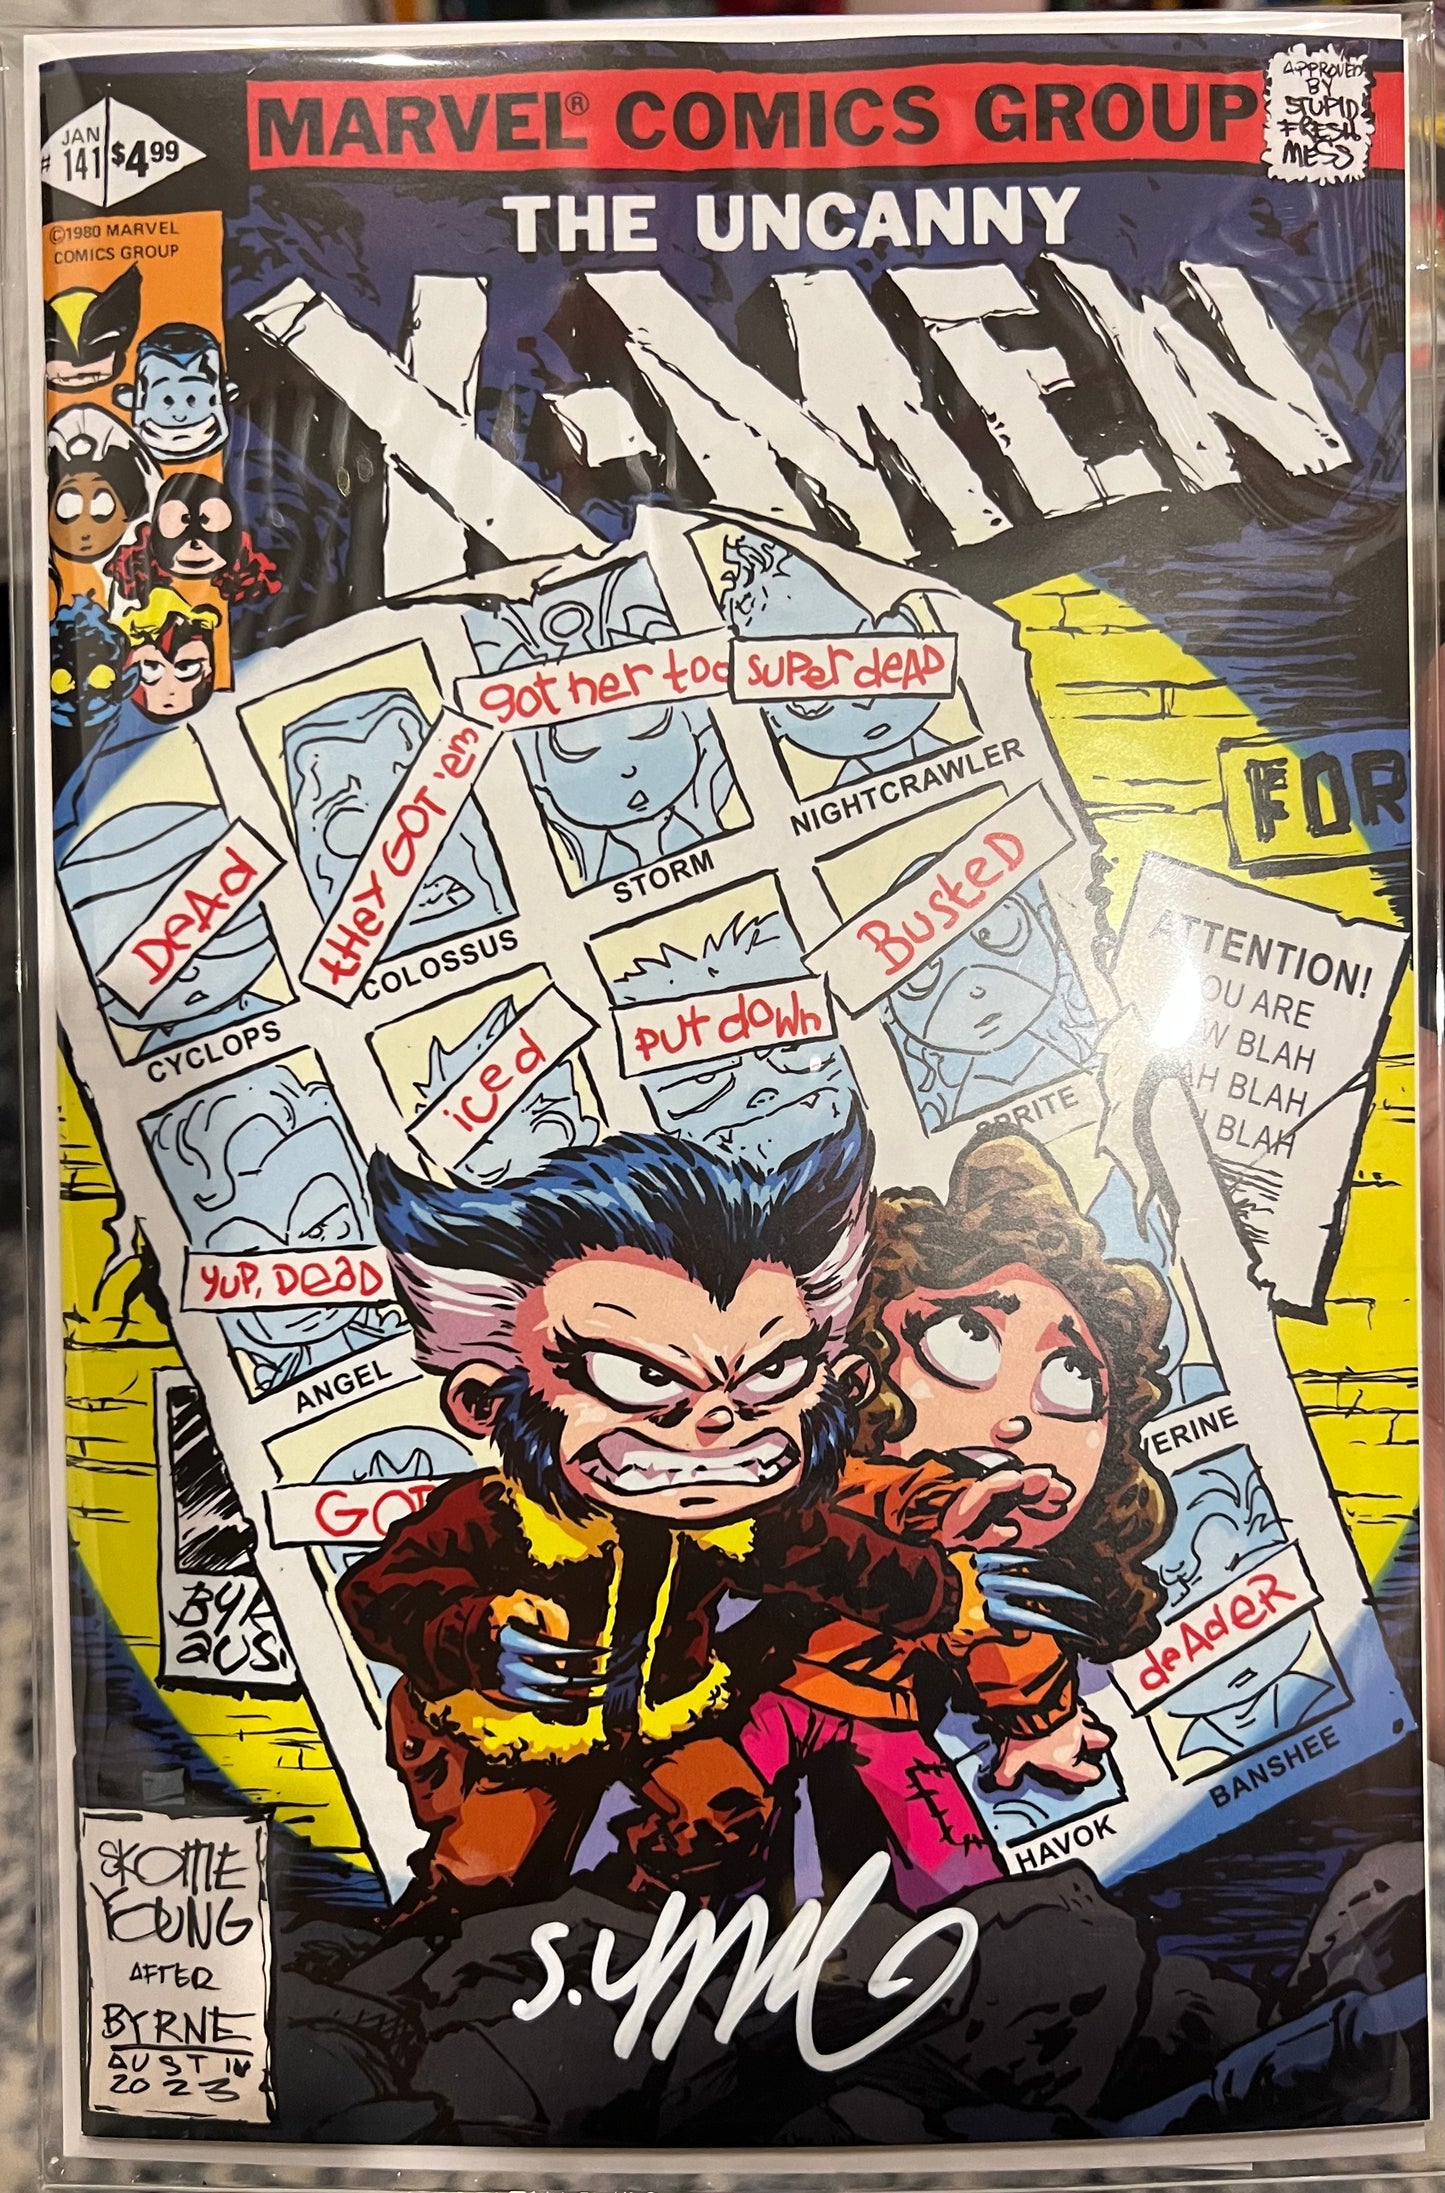 Uncanny X-Men #141 Facsimile Variant by Skottie Young (signed by Skottie) Marvel